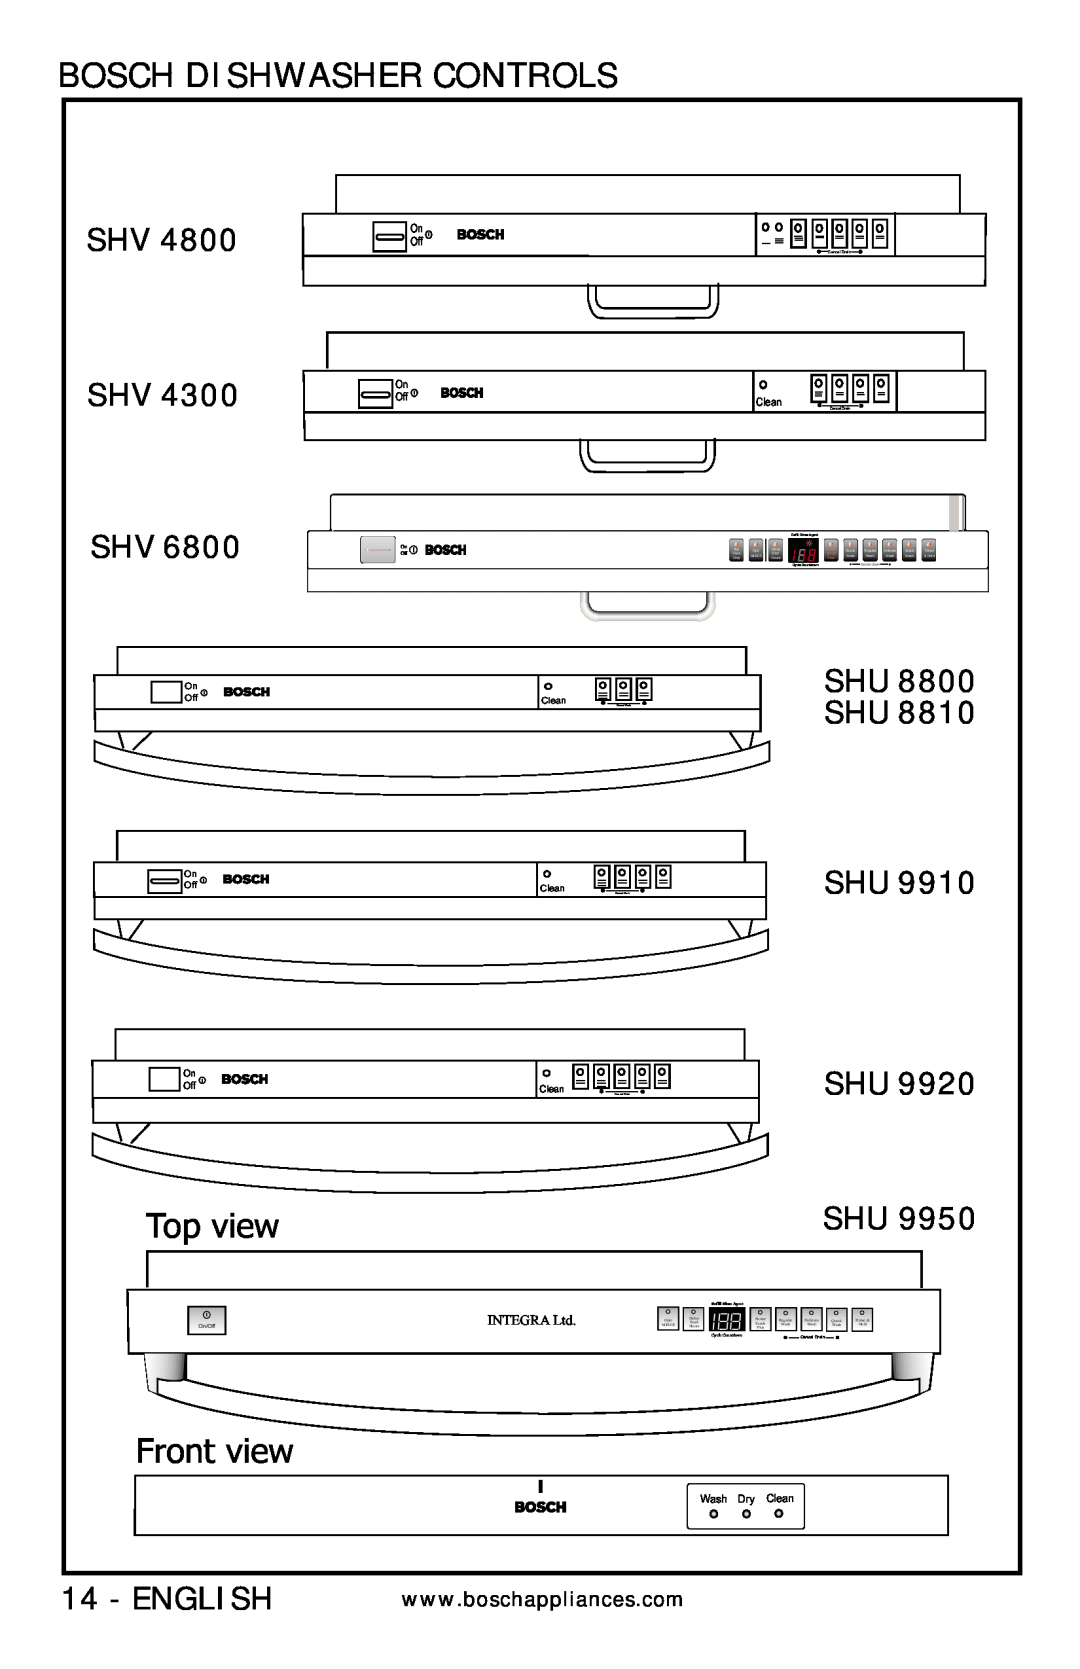 Bosch Appliances Bosch Dishwasher Controls, Shv Shv Shv, SHU 8800 SHU, Top view, Front view, On Off, Clean, Delay, Rack 